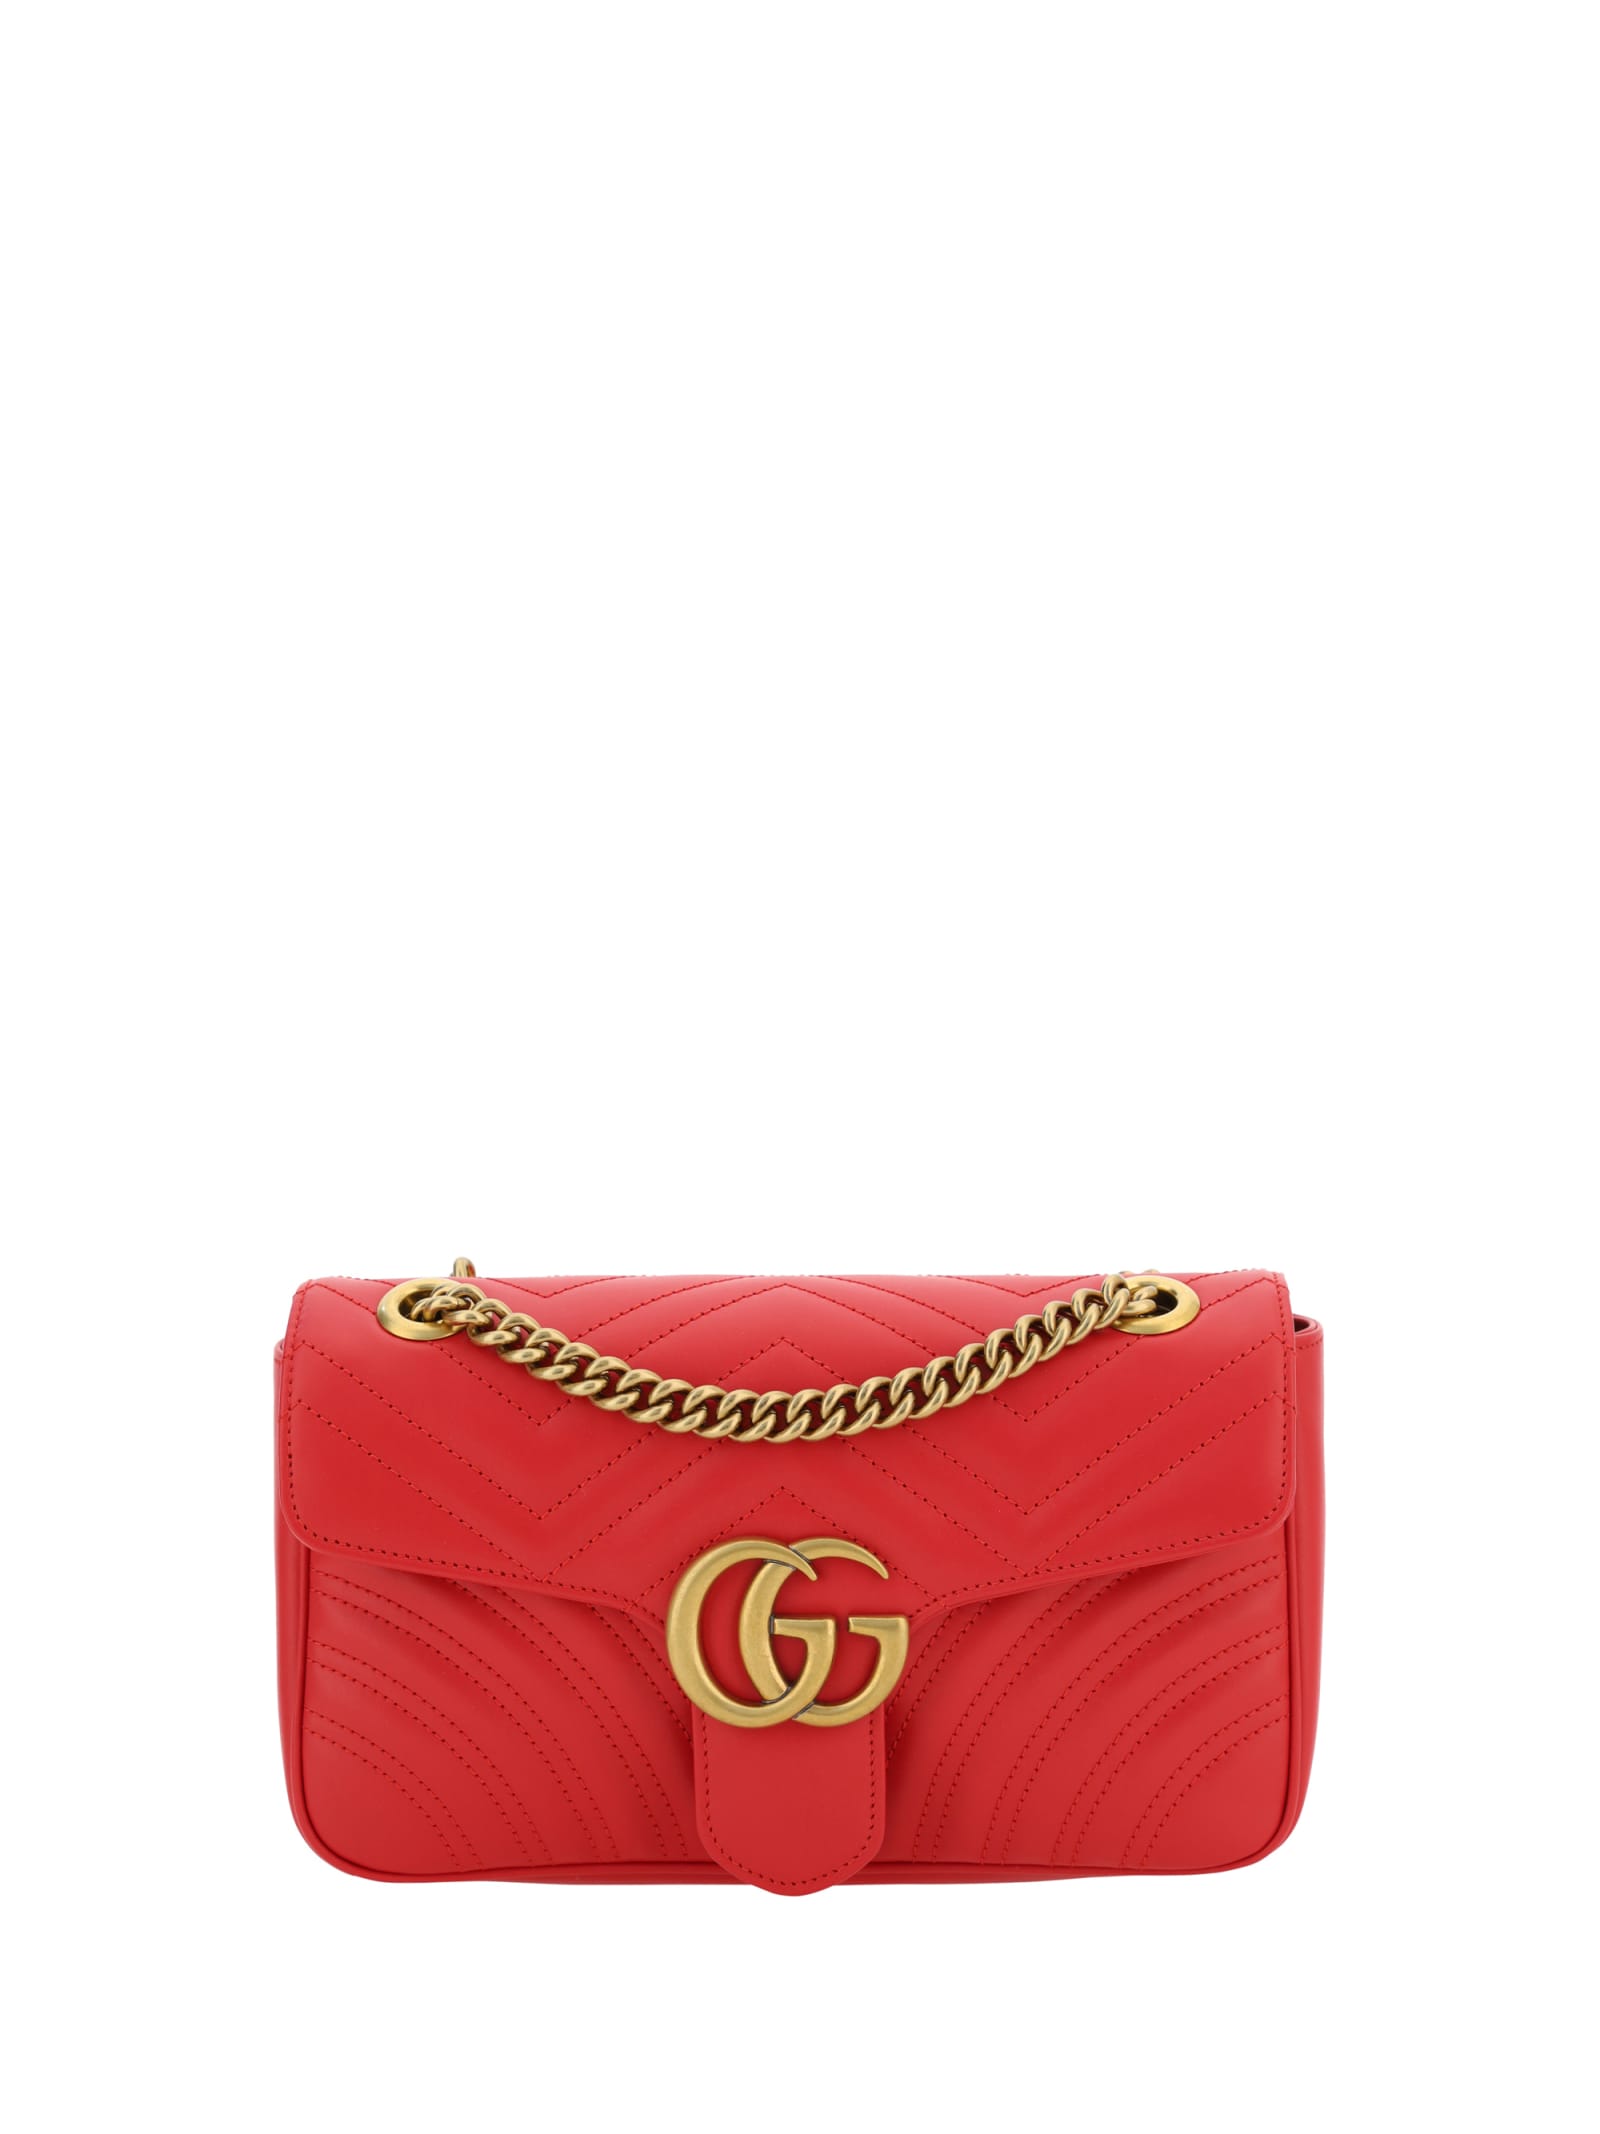 Gucci Gg Marmont Shoulder Bag